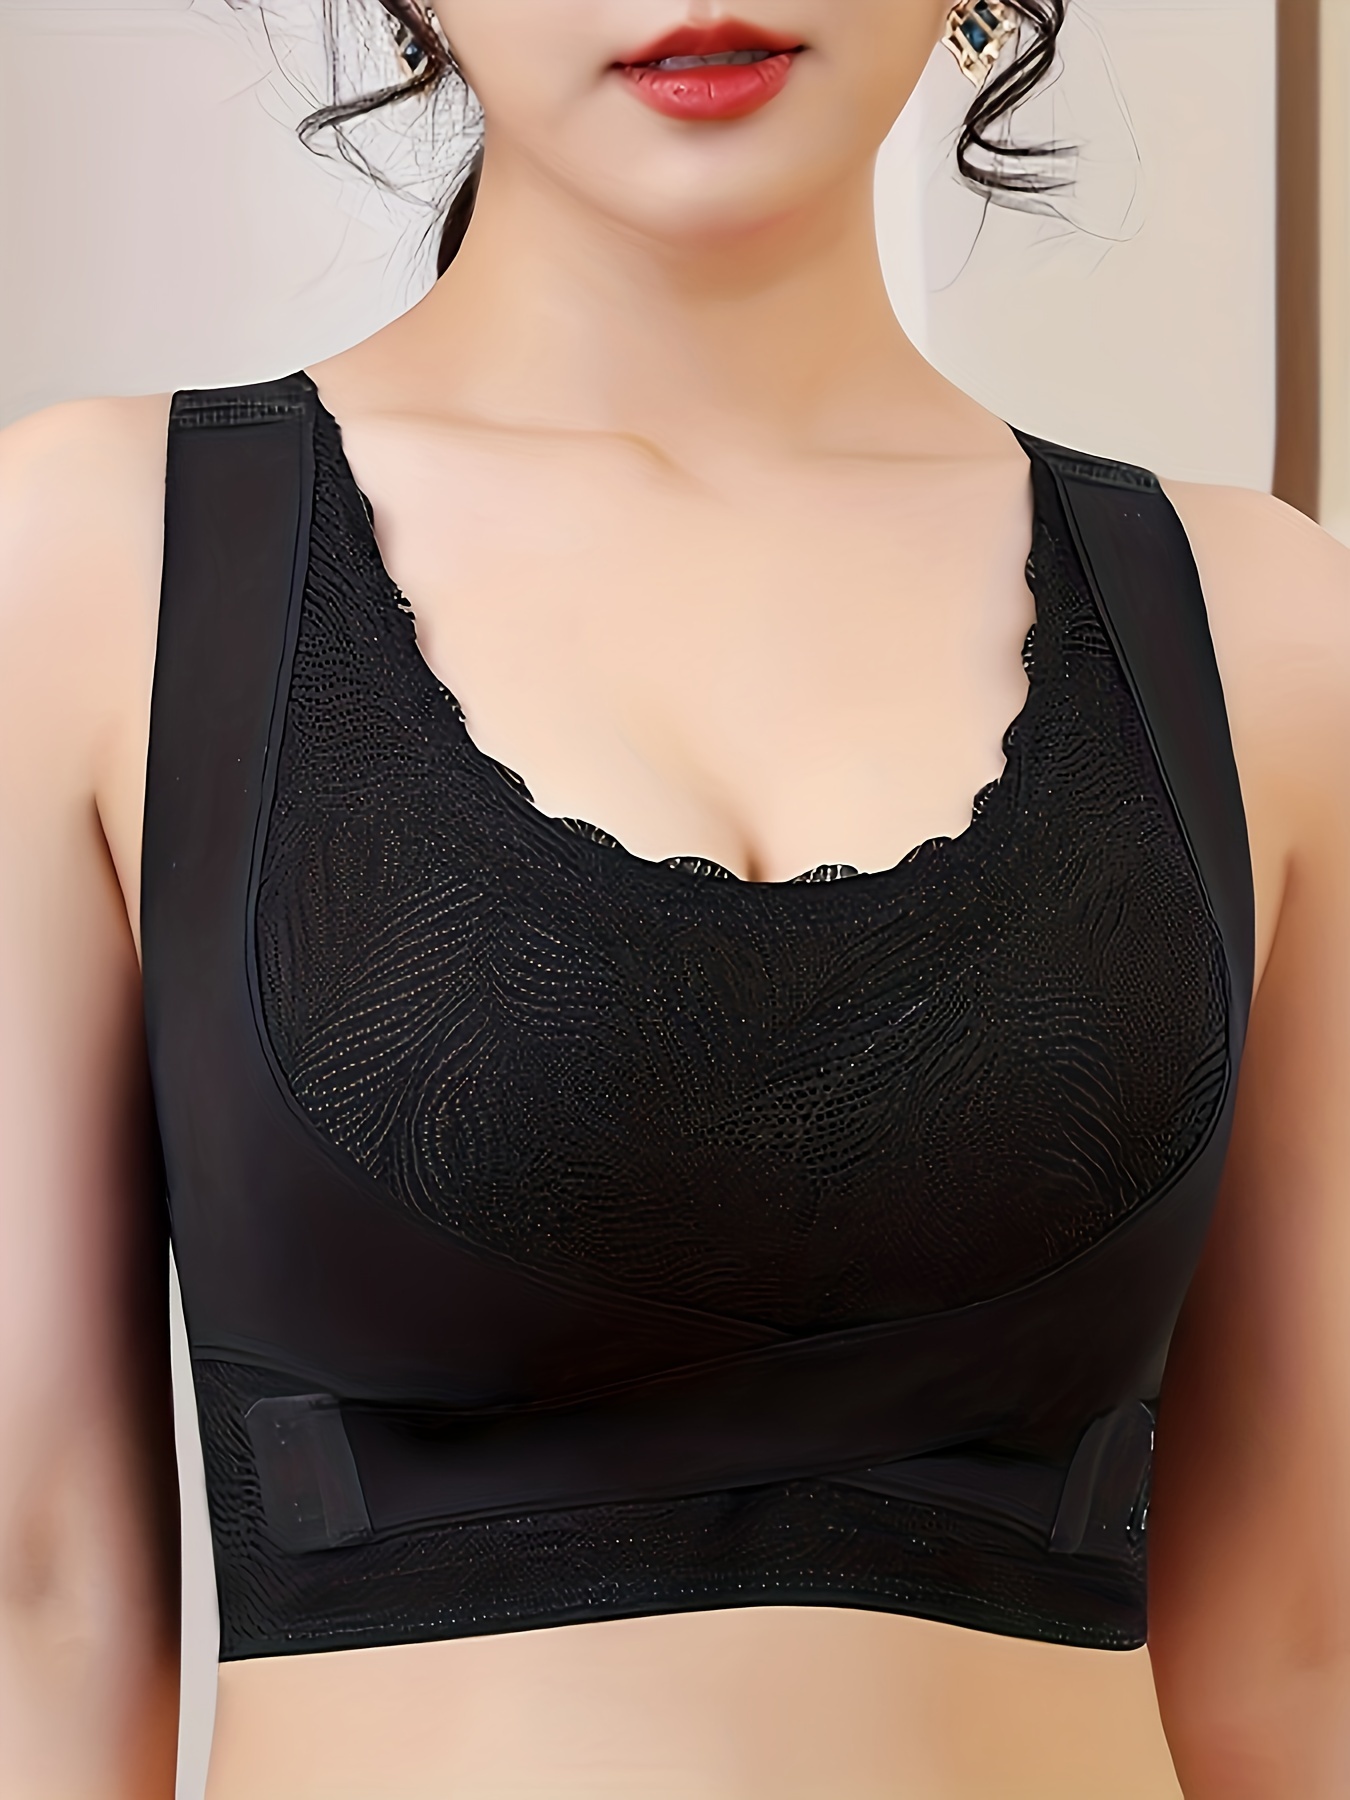 SZXZYGS Underoutfit Bras for Women Classic Lace Women's Wireless